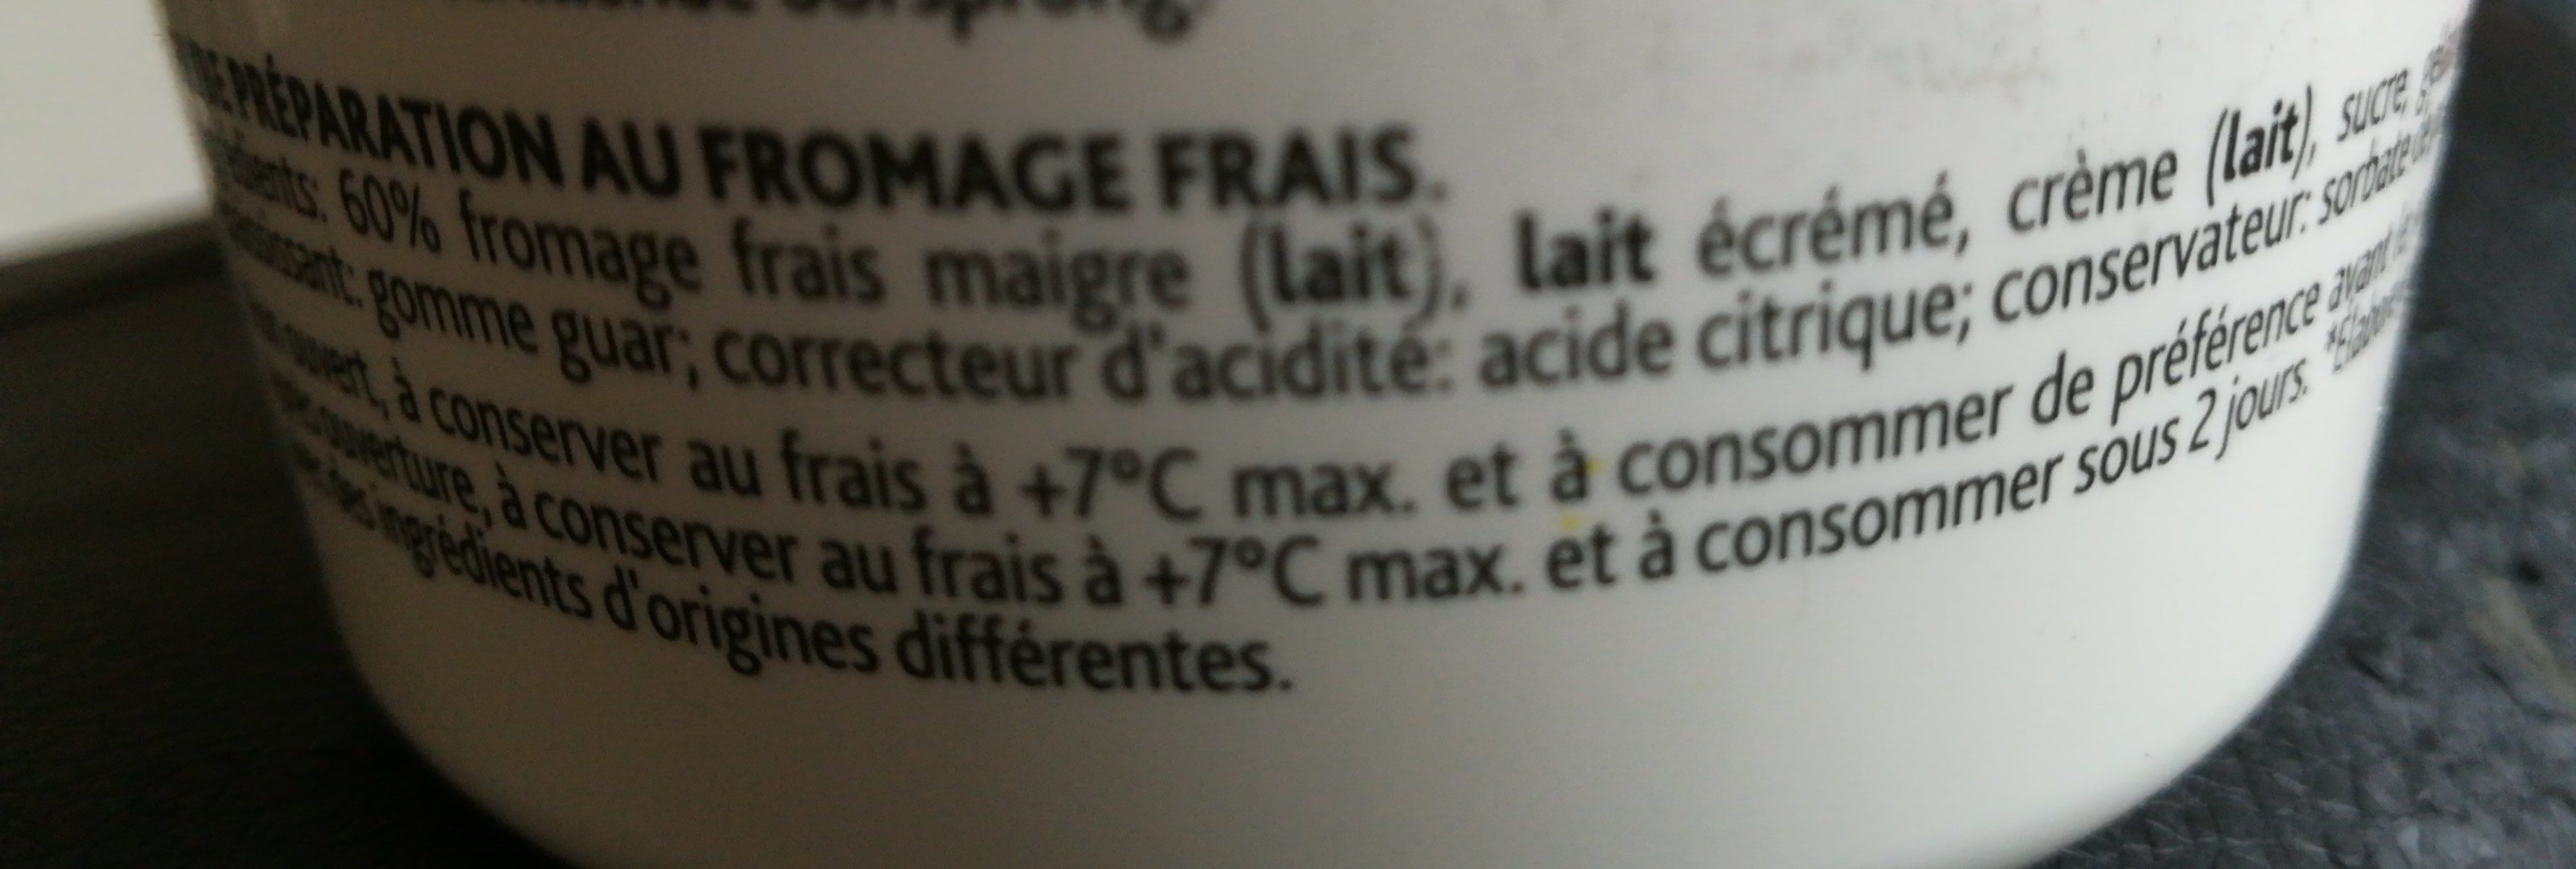 Fromage Frais Nature - Ingrediënten - fr